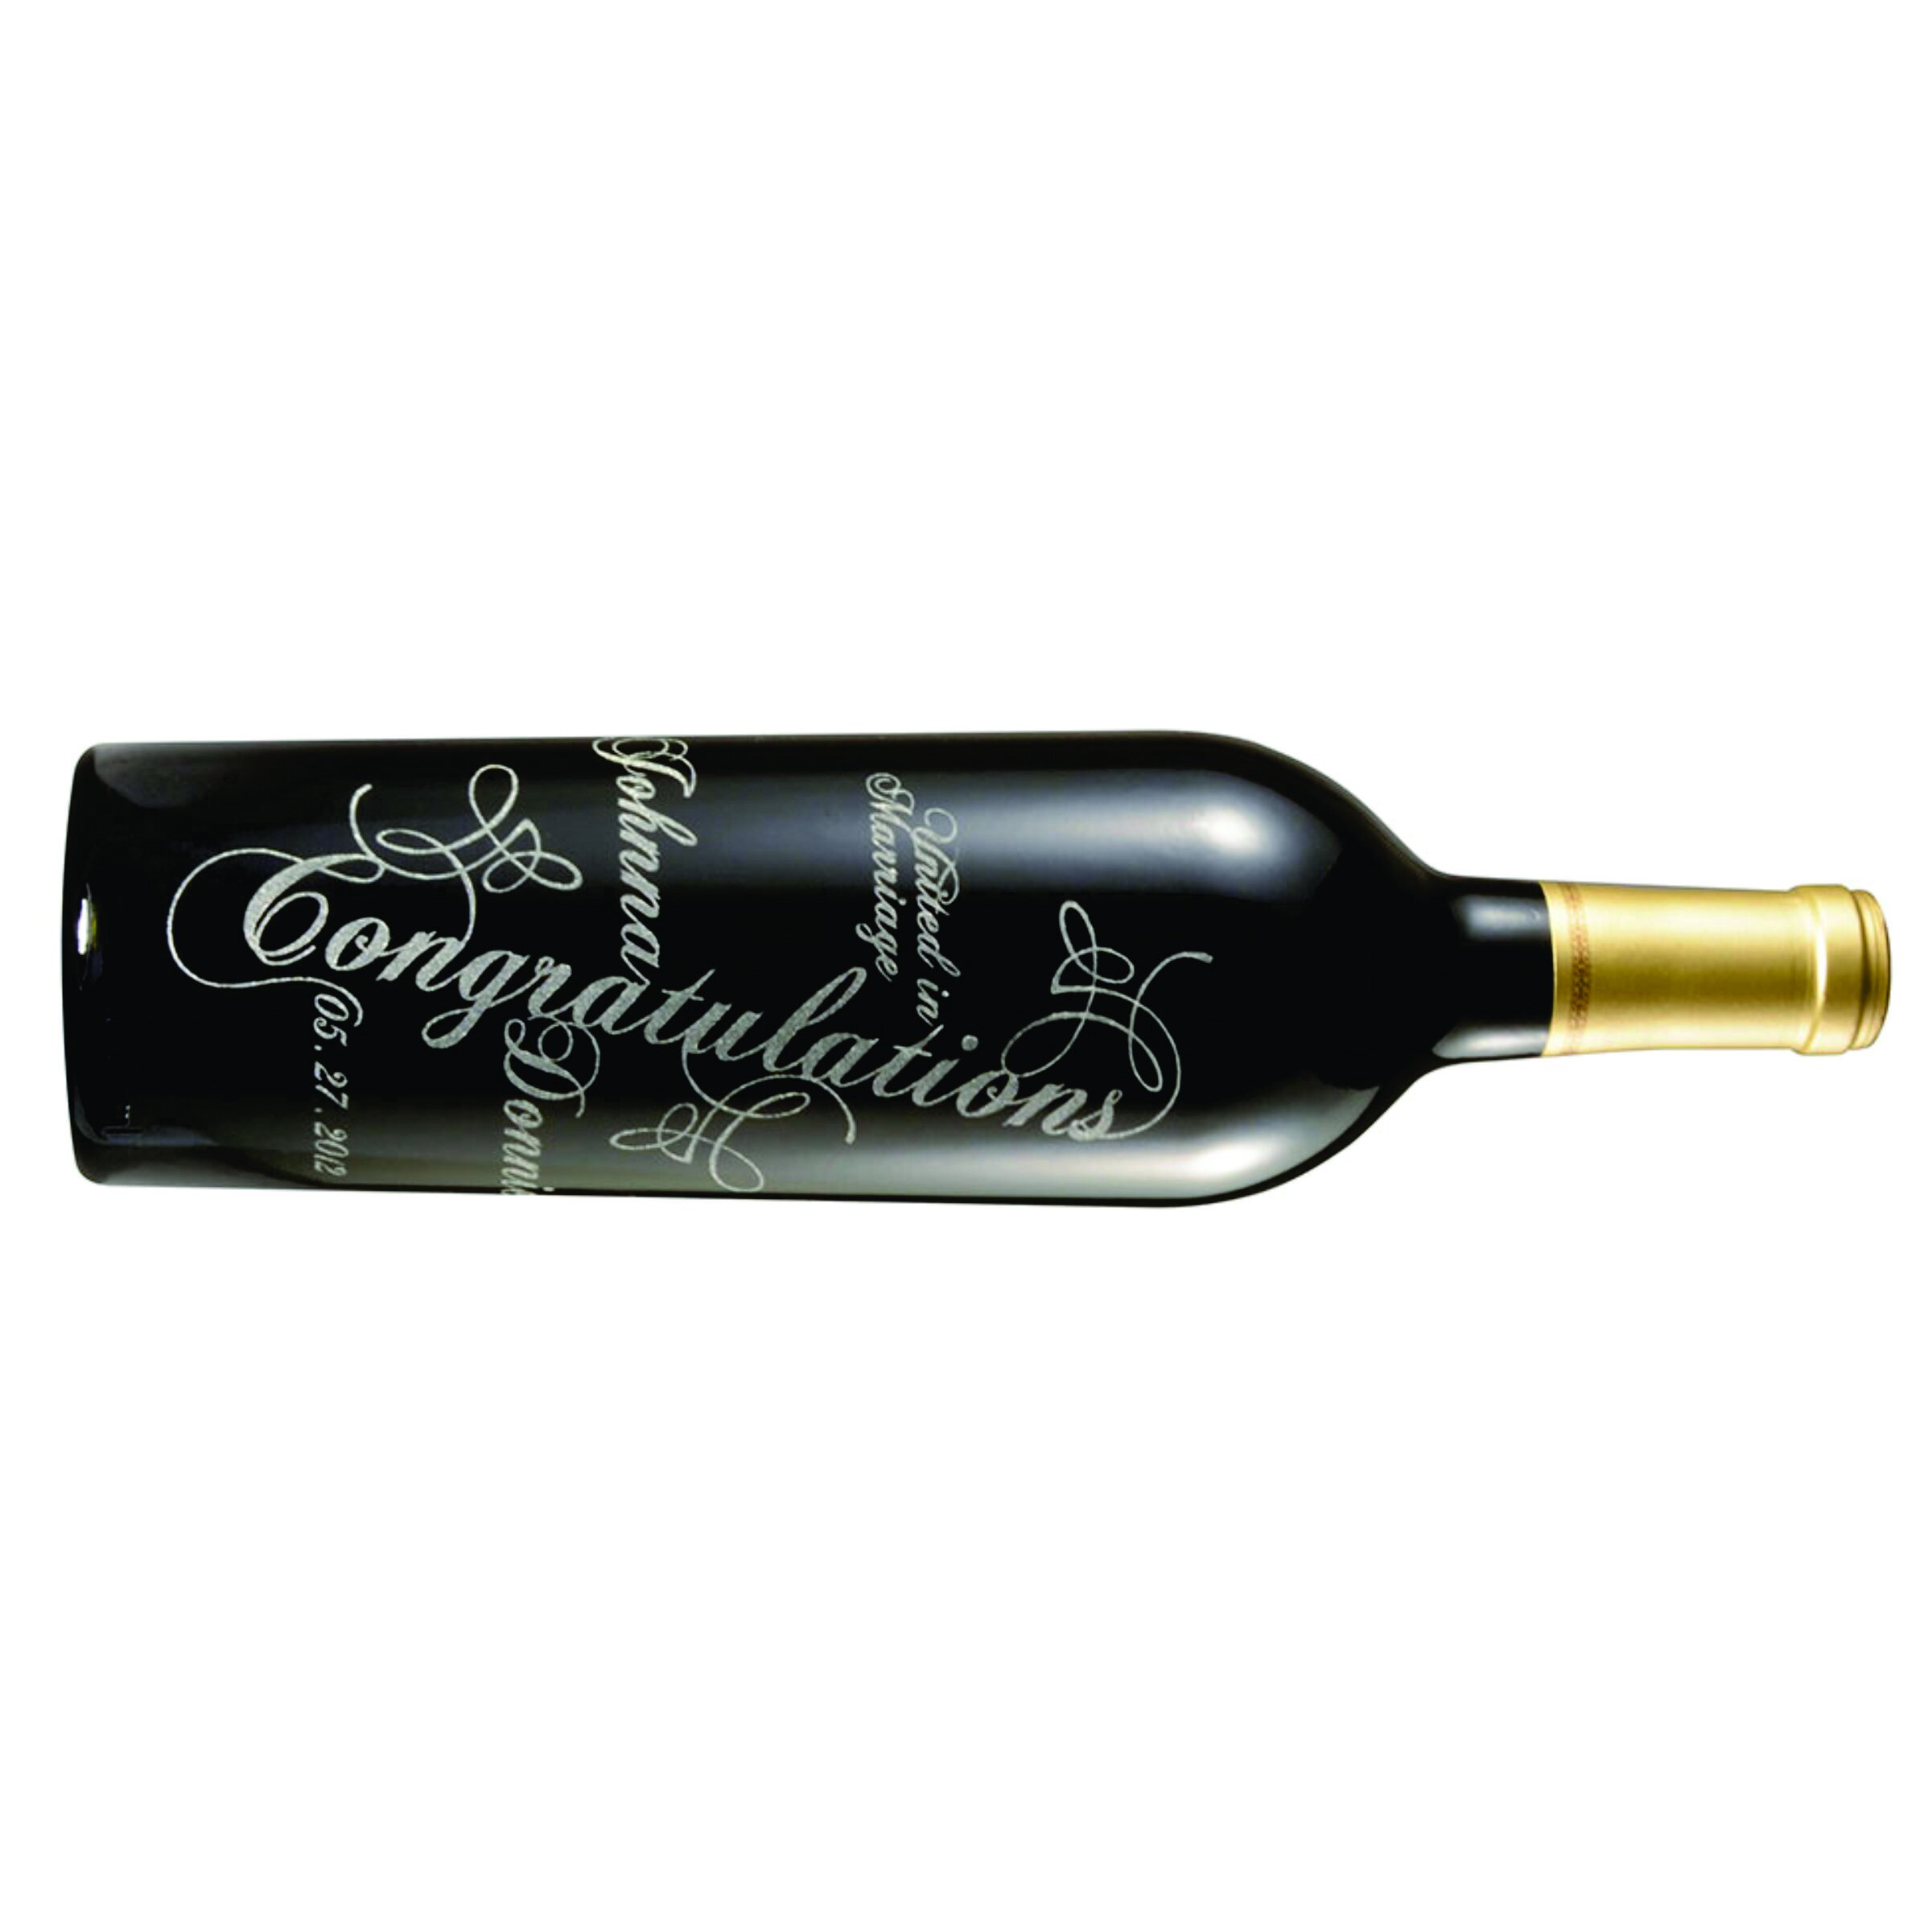 gls-wine-bottle-congratulations.jpg